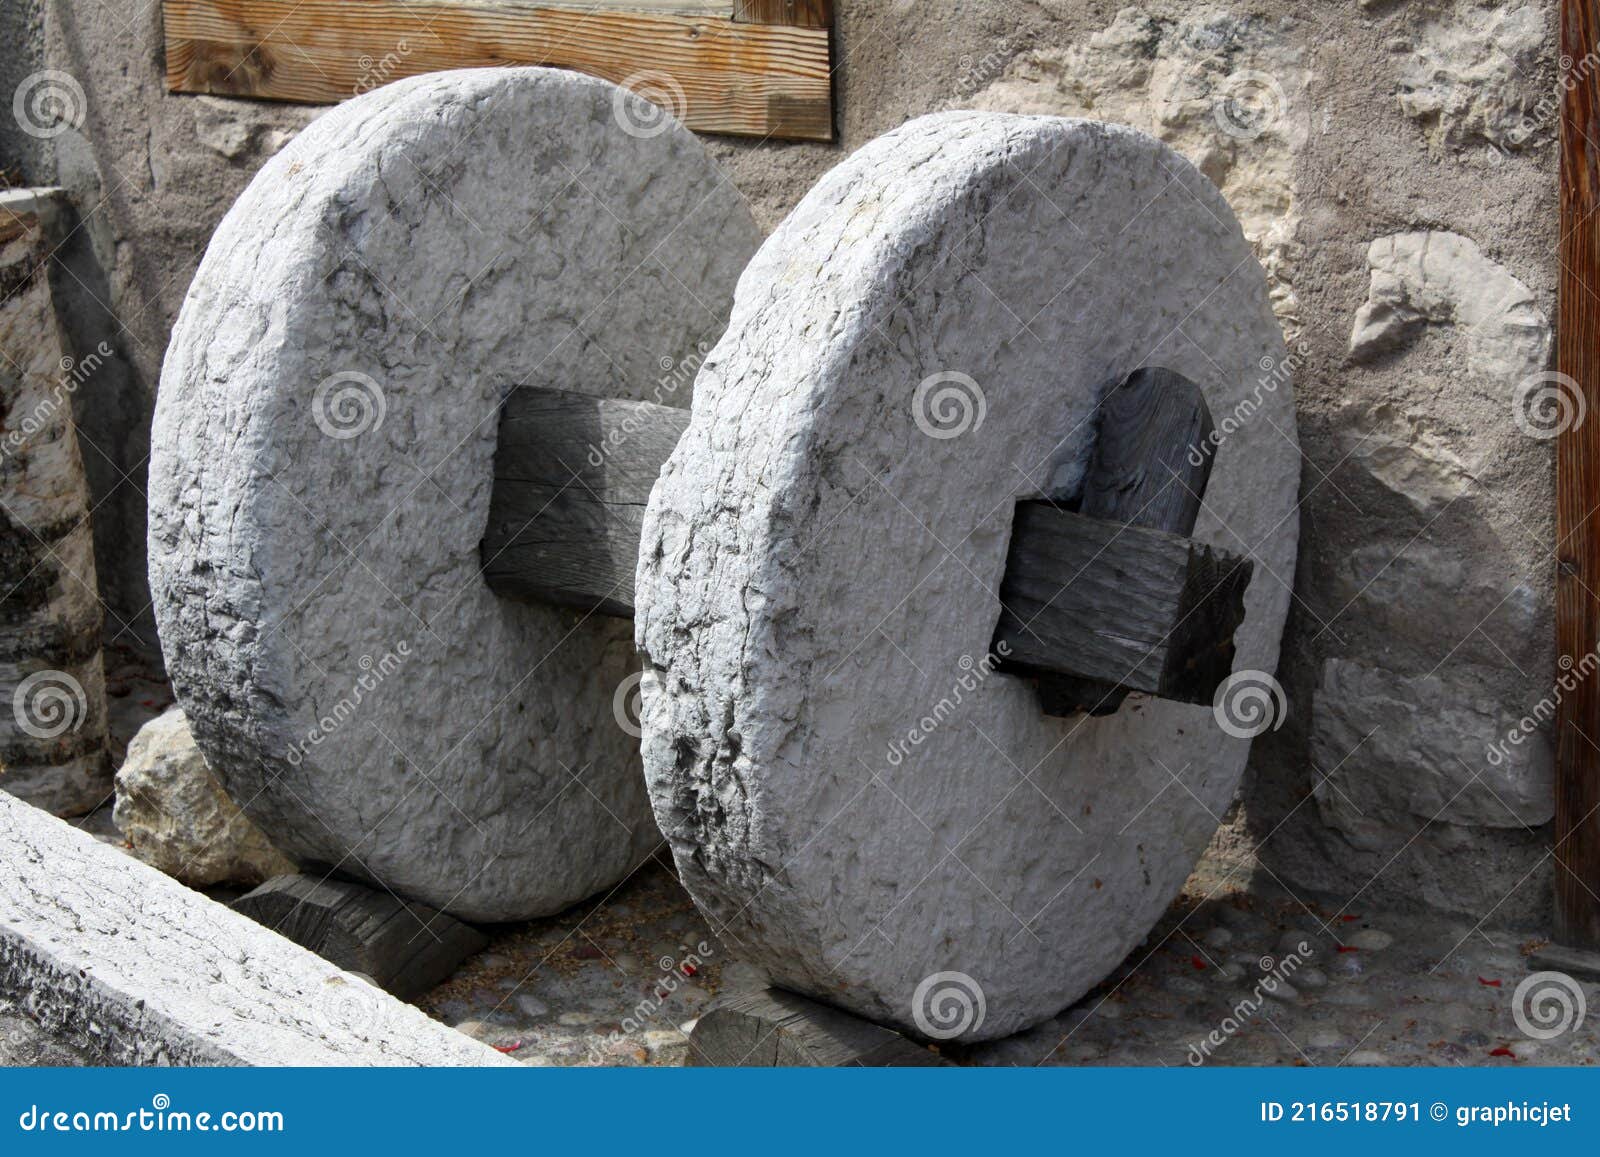 stonewheel detail near a millstone in guardia, trentino, italy